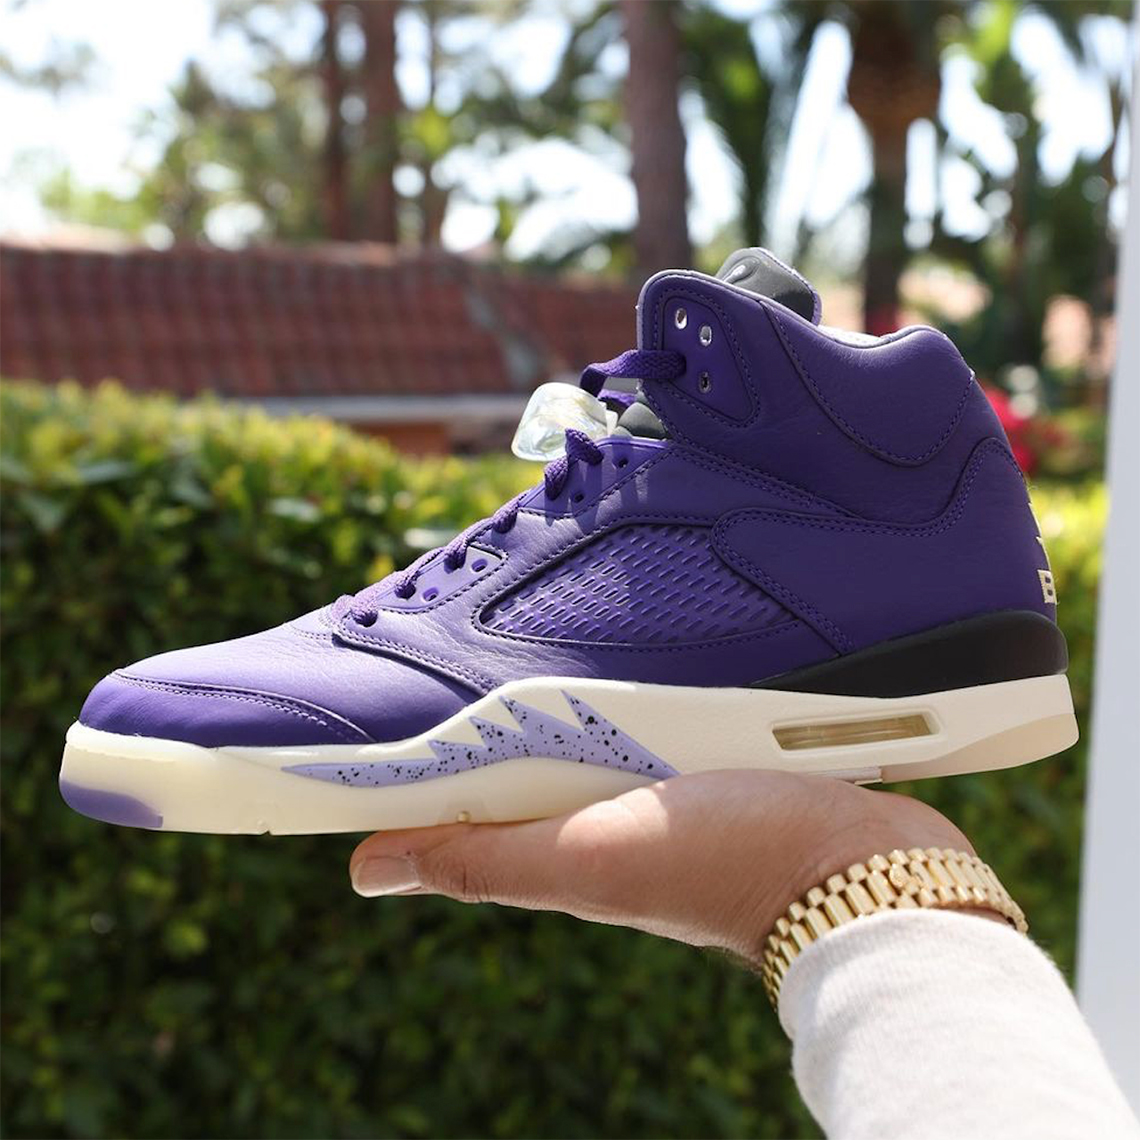 Air Jordan 5 DJ Khaled We The Best | SneakerNews.com